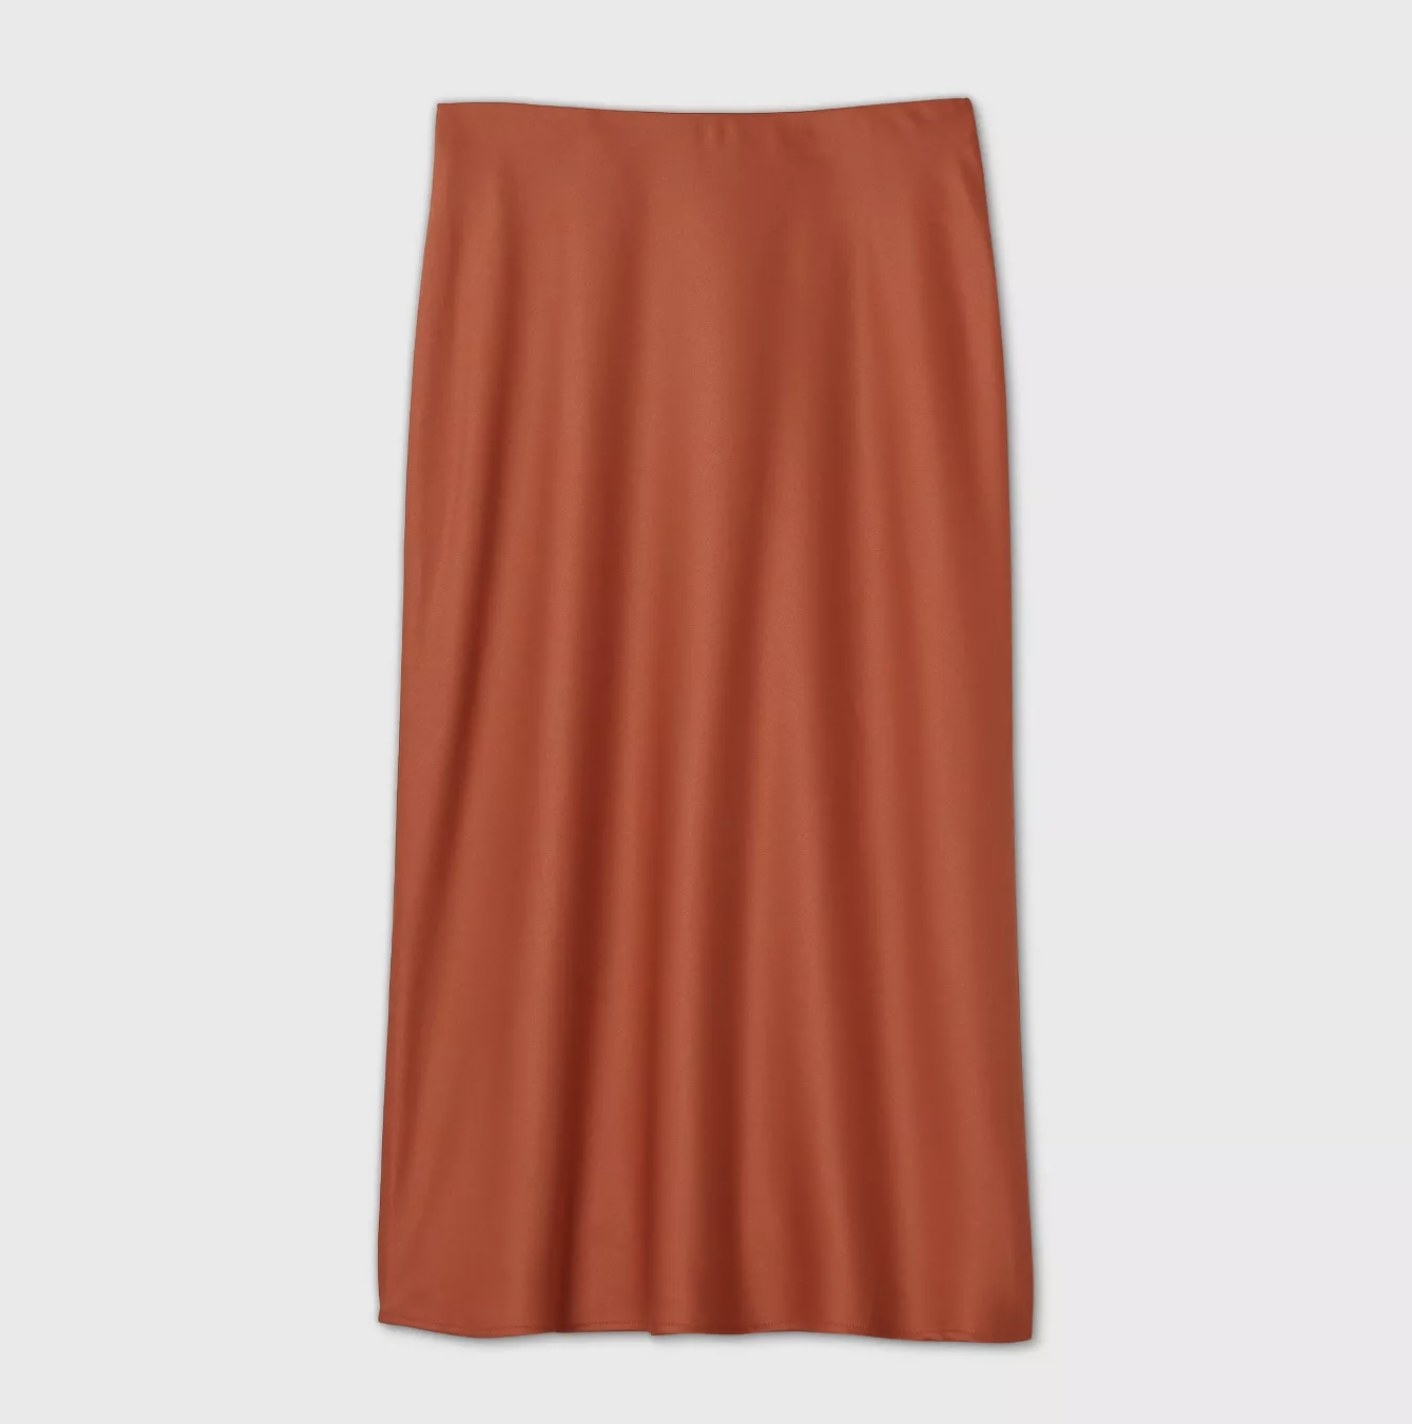 A burnt orange a-line midi skirt